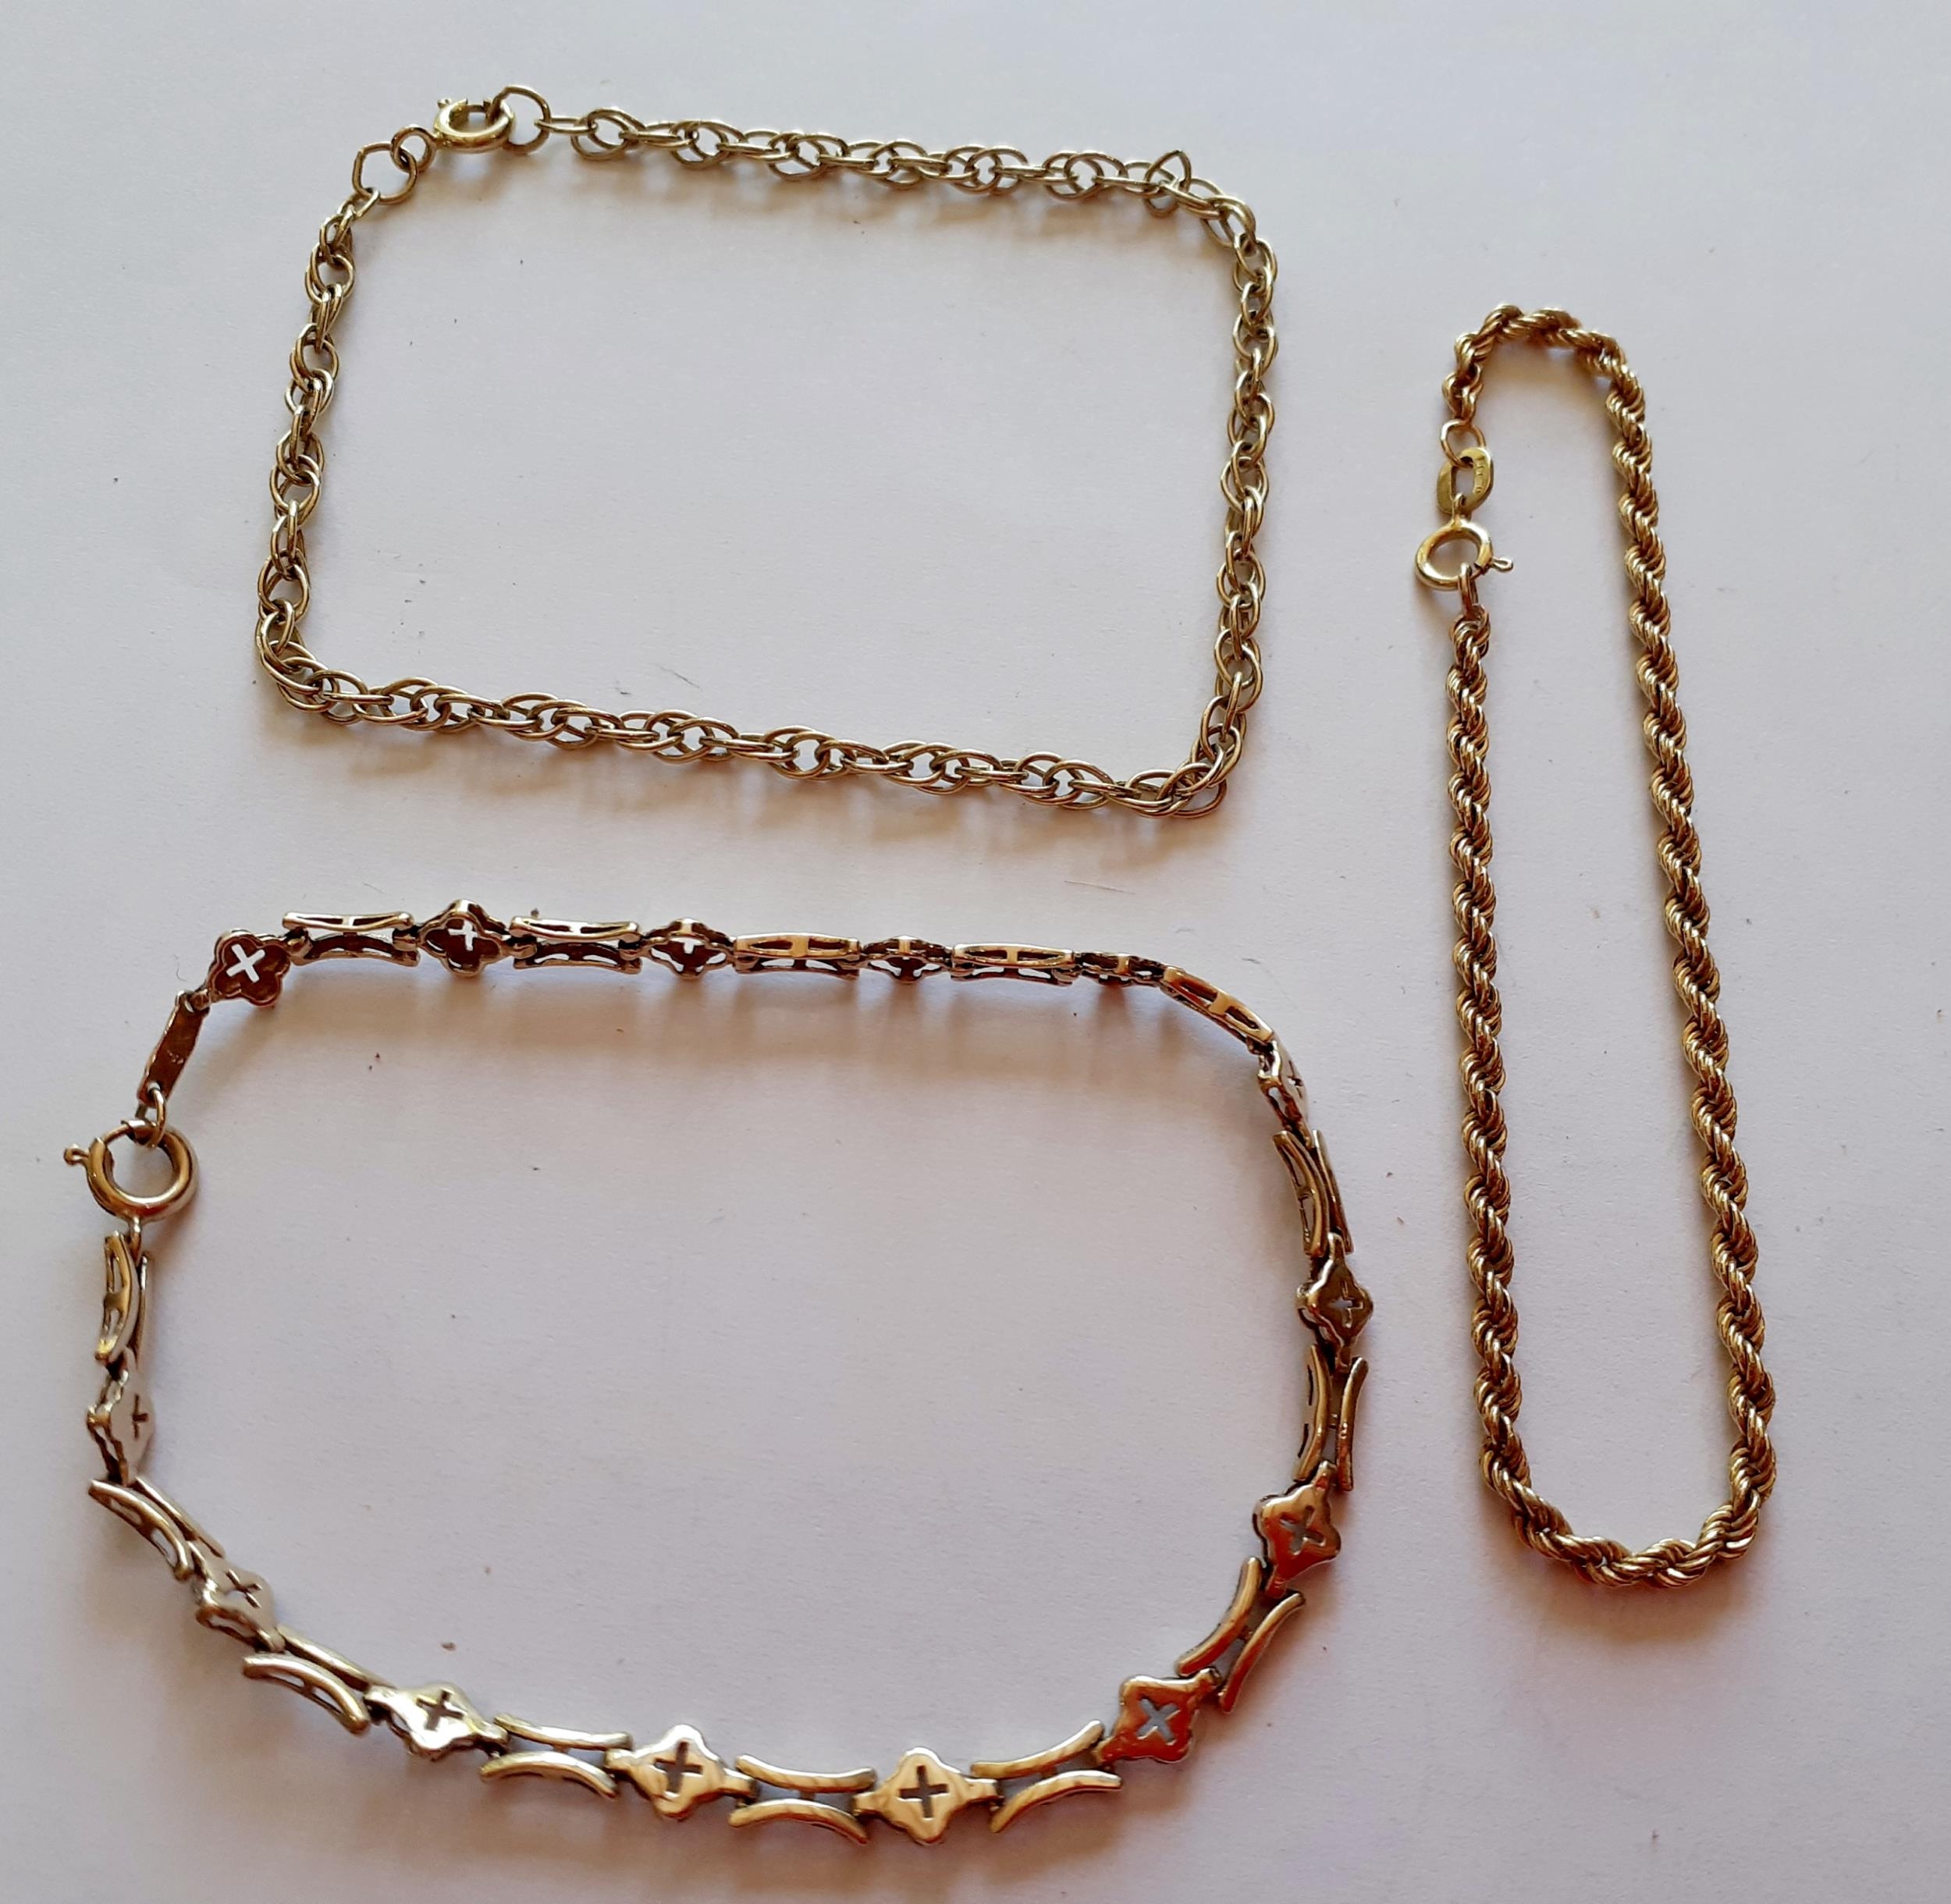 Three 9ct gold bracelets, 8.68g - Image 2 of 2